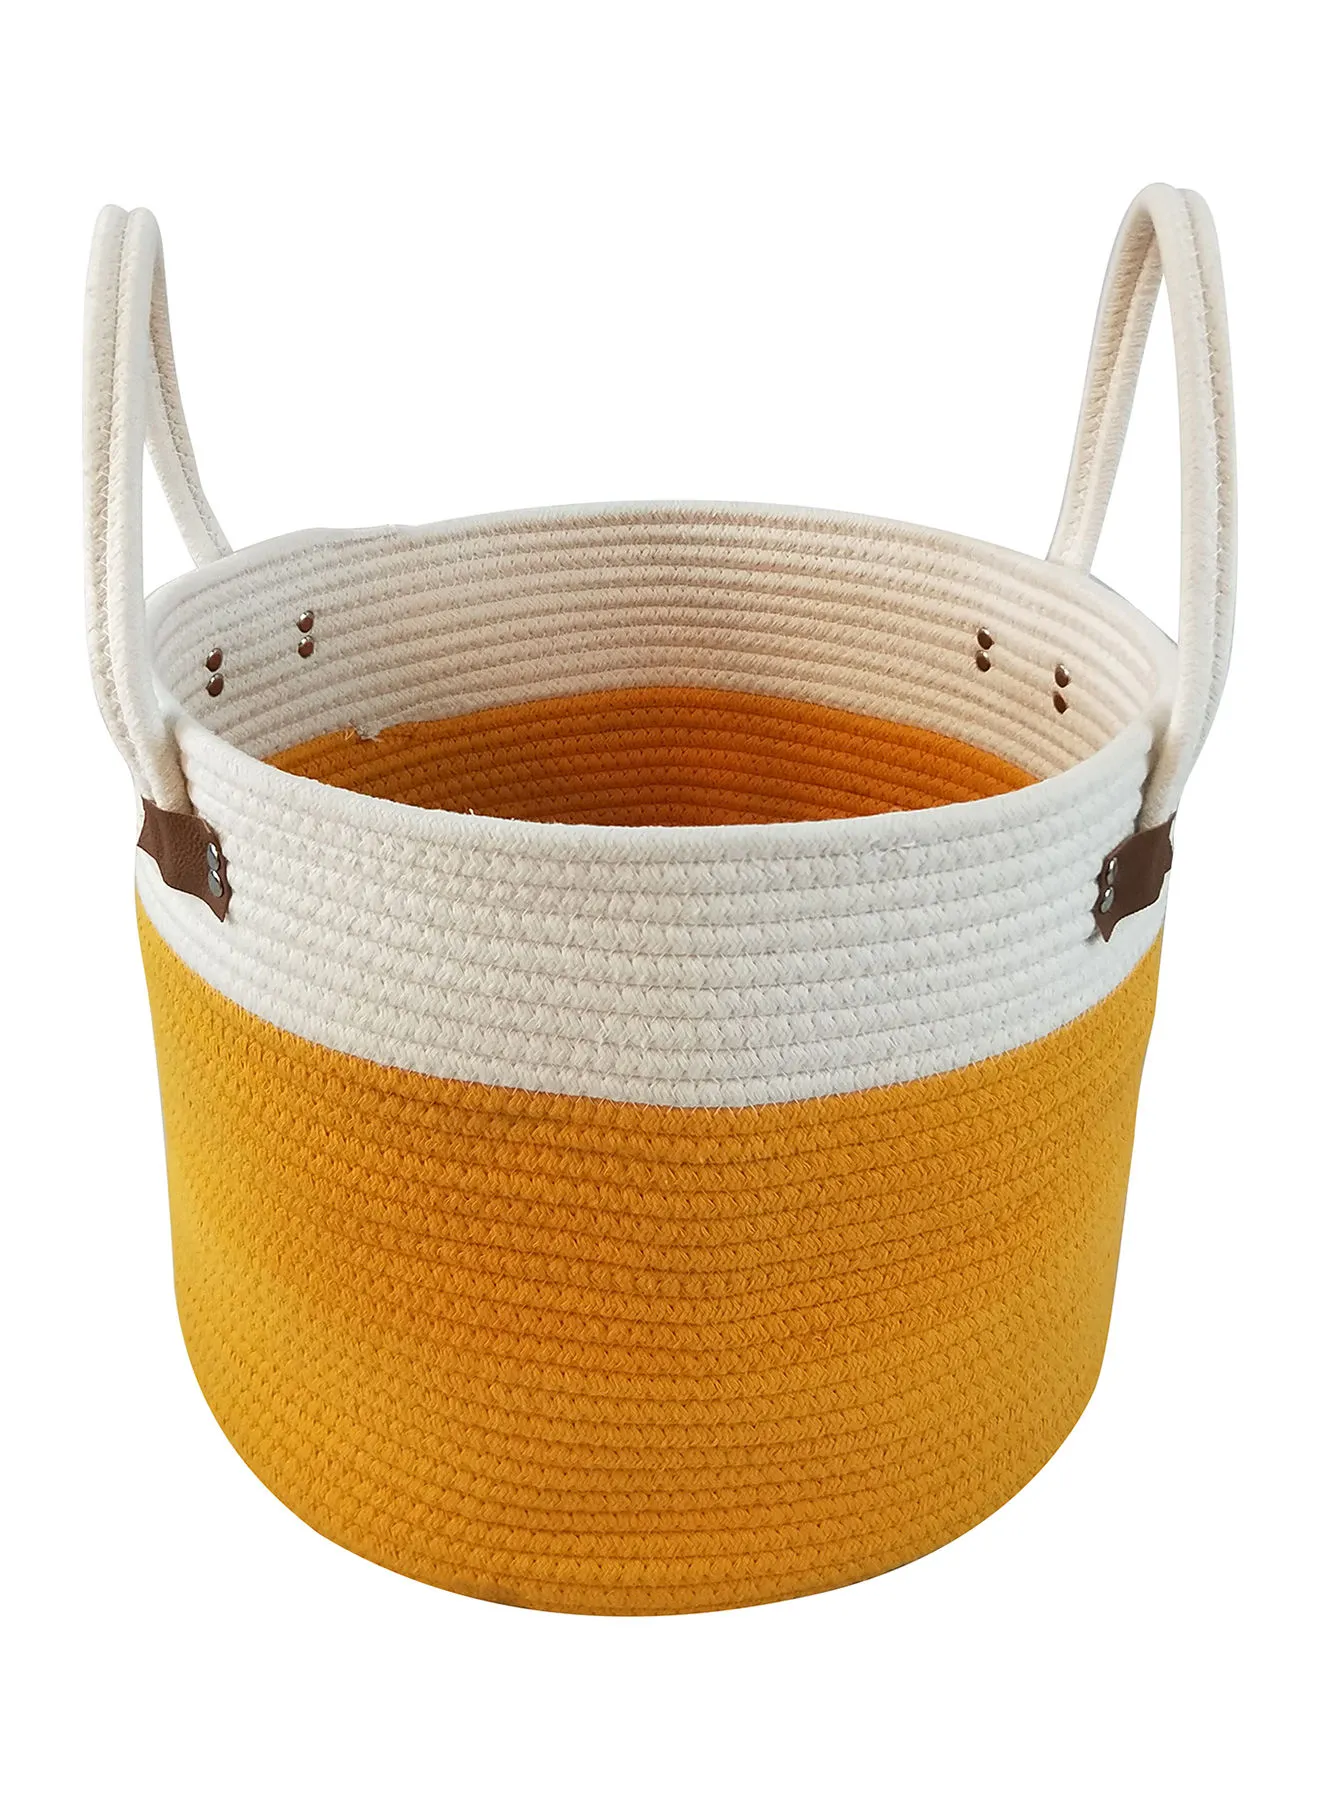 Amal Handmade Cotton Rope Laundry Basket WL2021 - 1035 White/Yellow 29cm